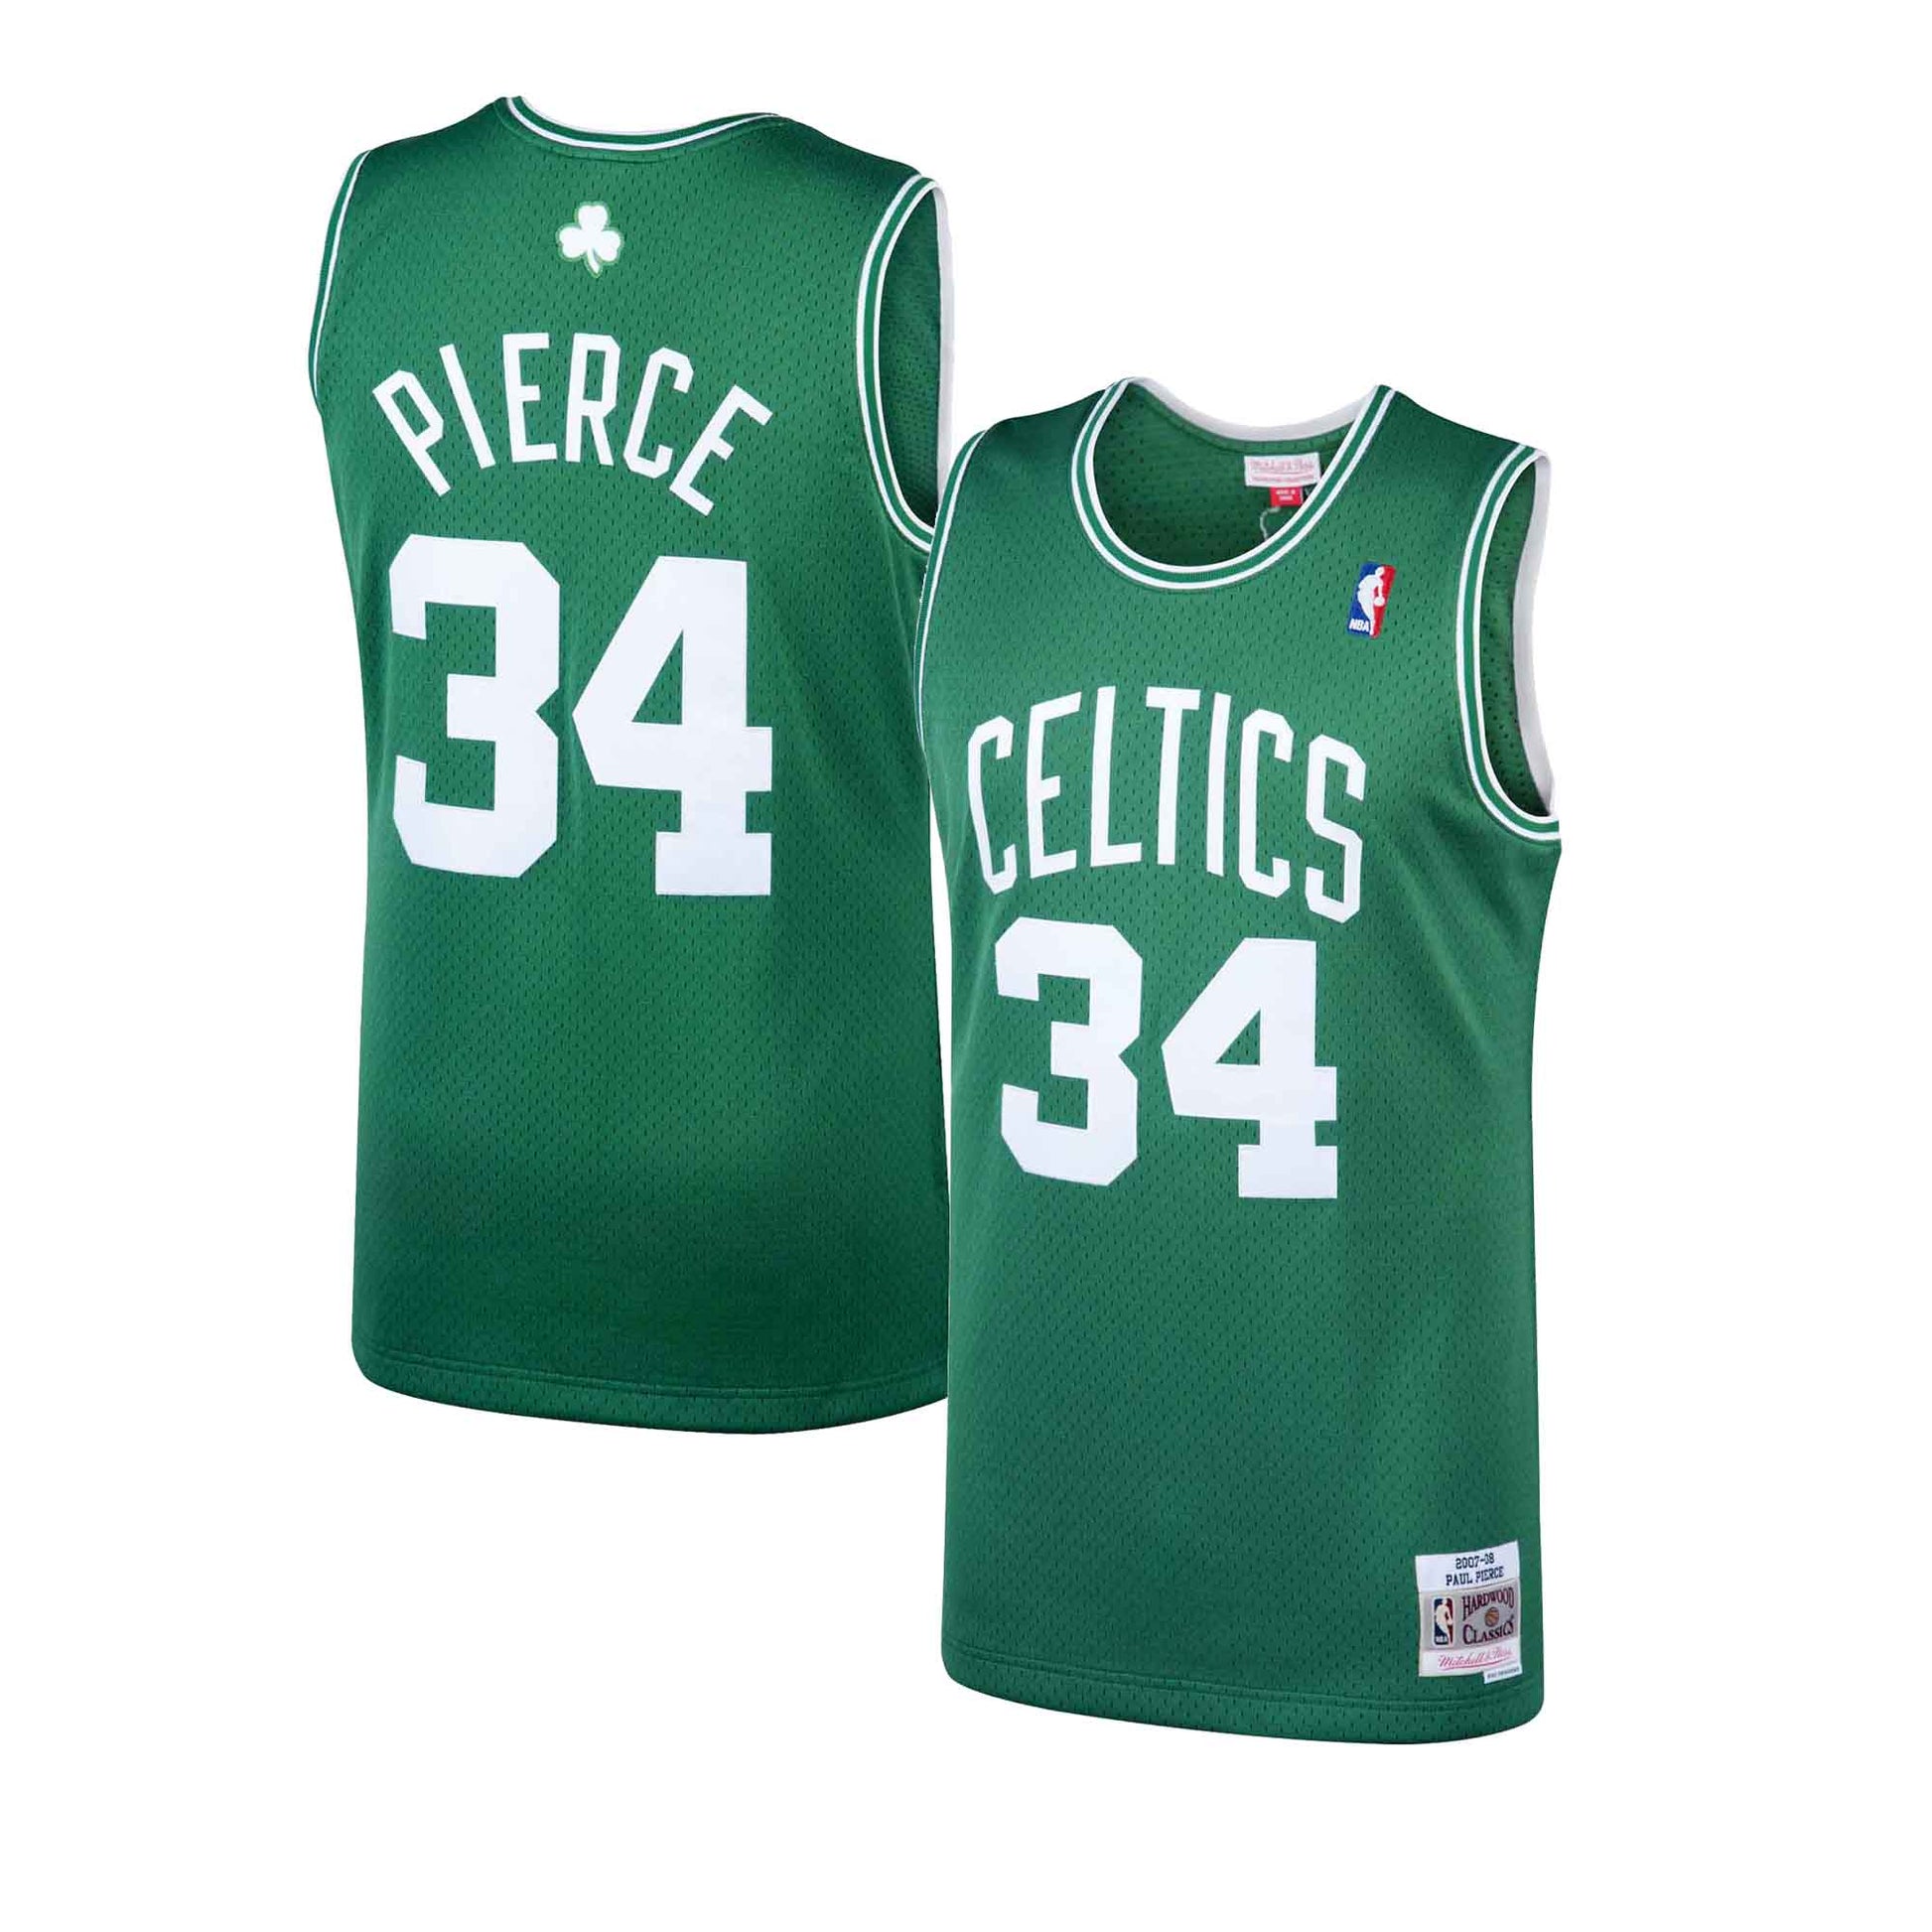 Nba Boston Celtics Basketball Jersey #34 Pierce